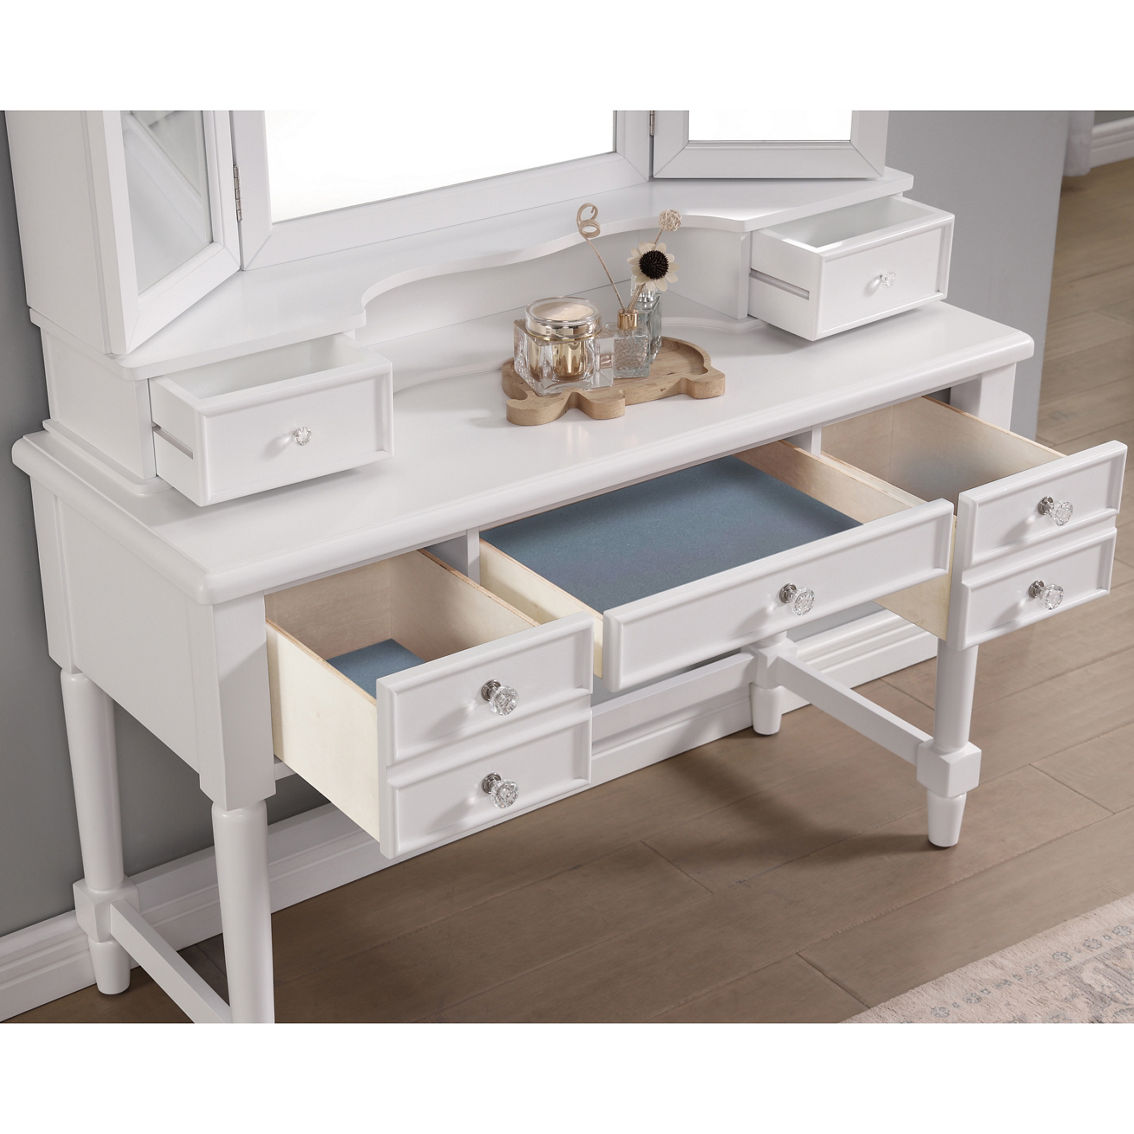 Furniture of America Estae White Vanity 3 pc. Set - Image 3 of 3